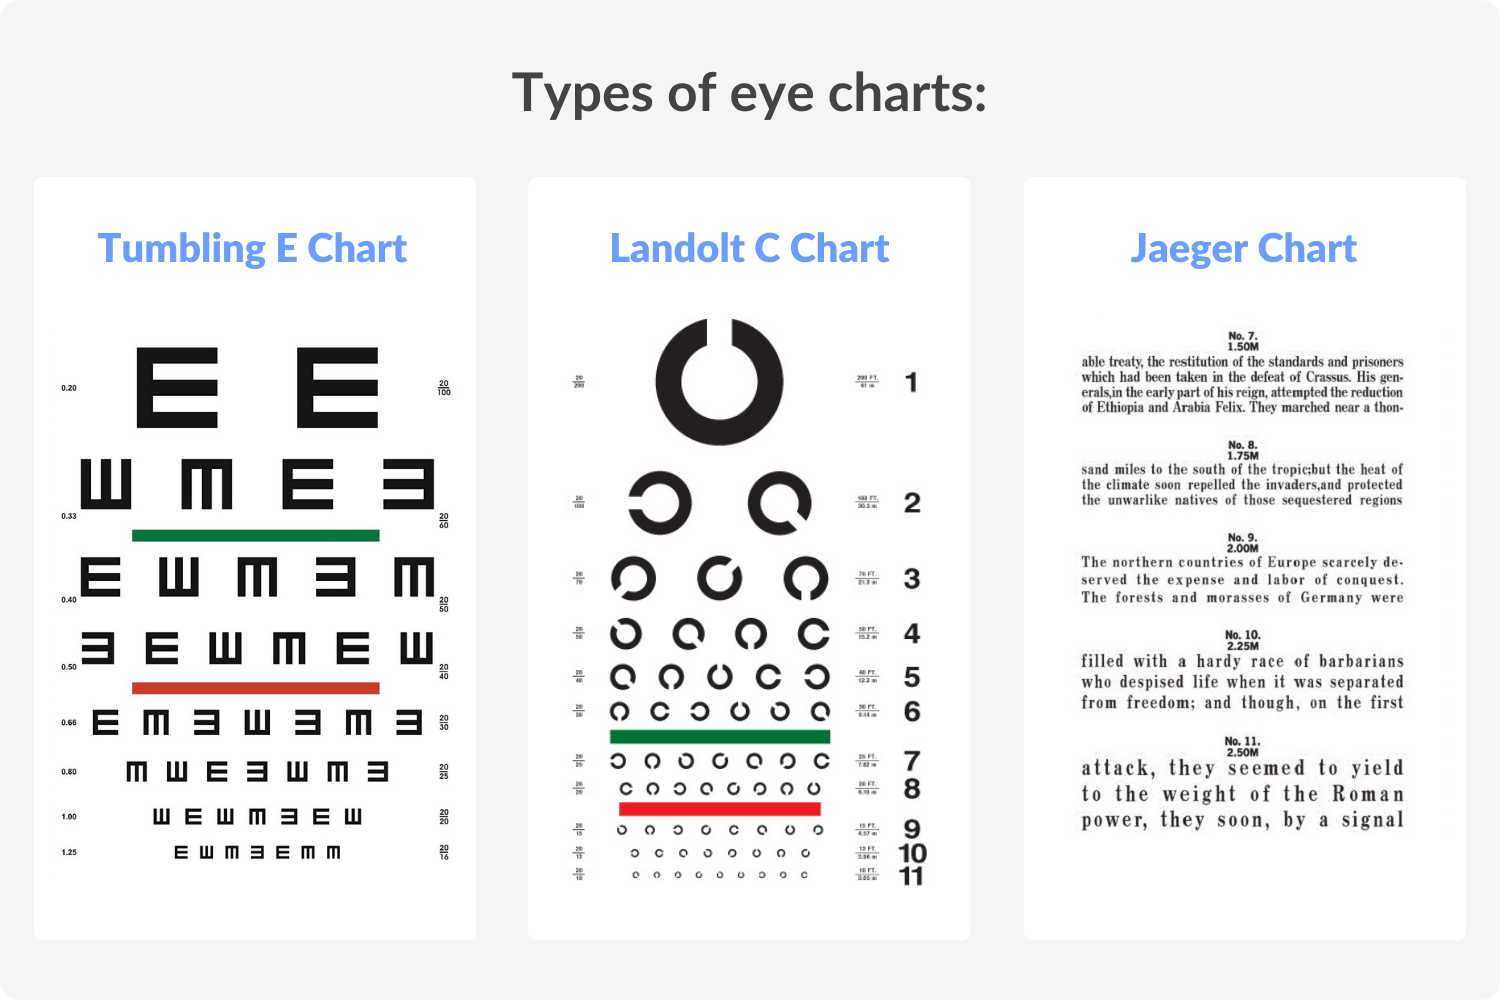 Types of eye charts